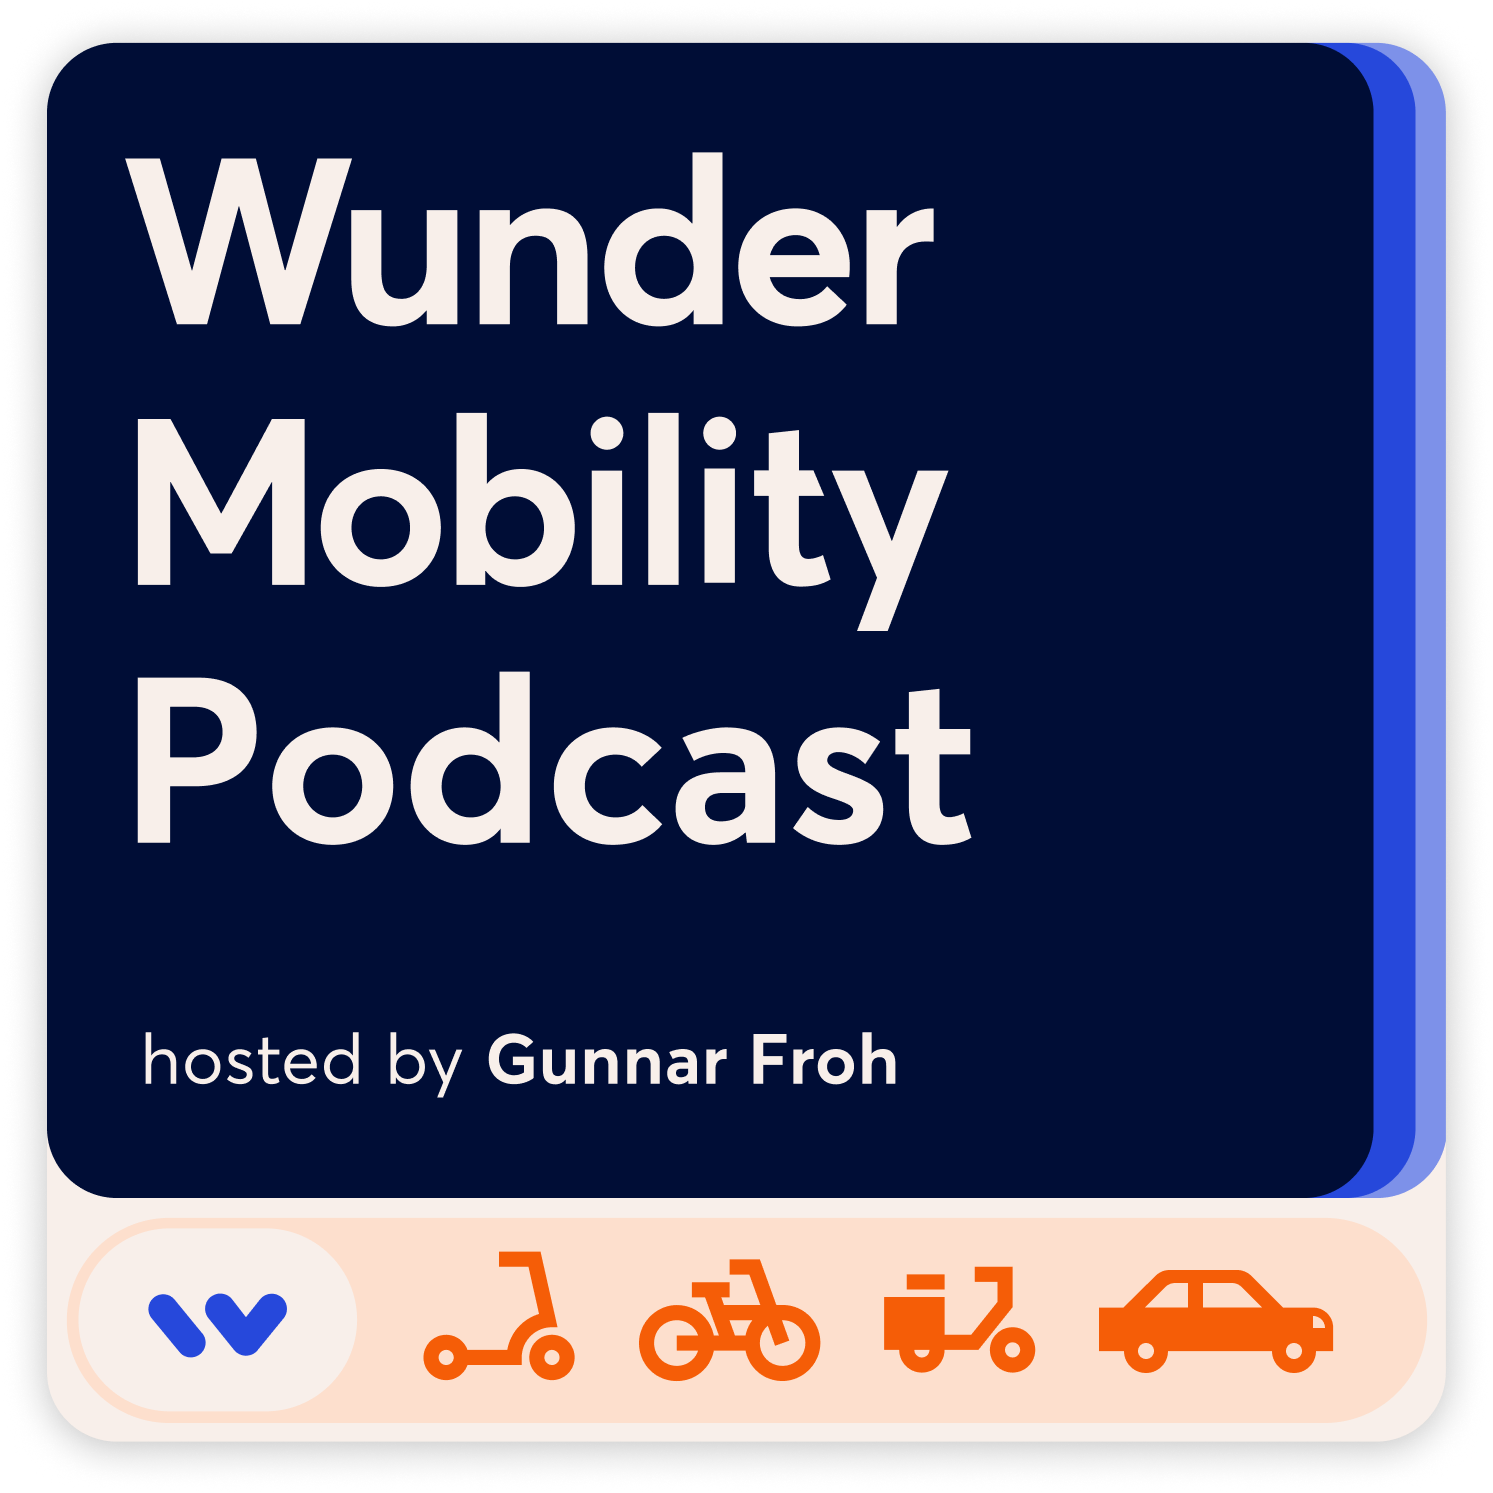 Wunder Mobility Podcast